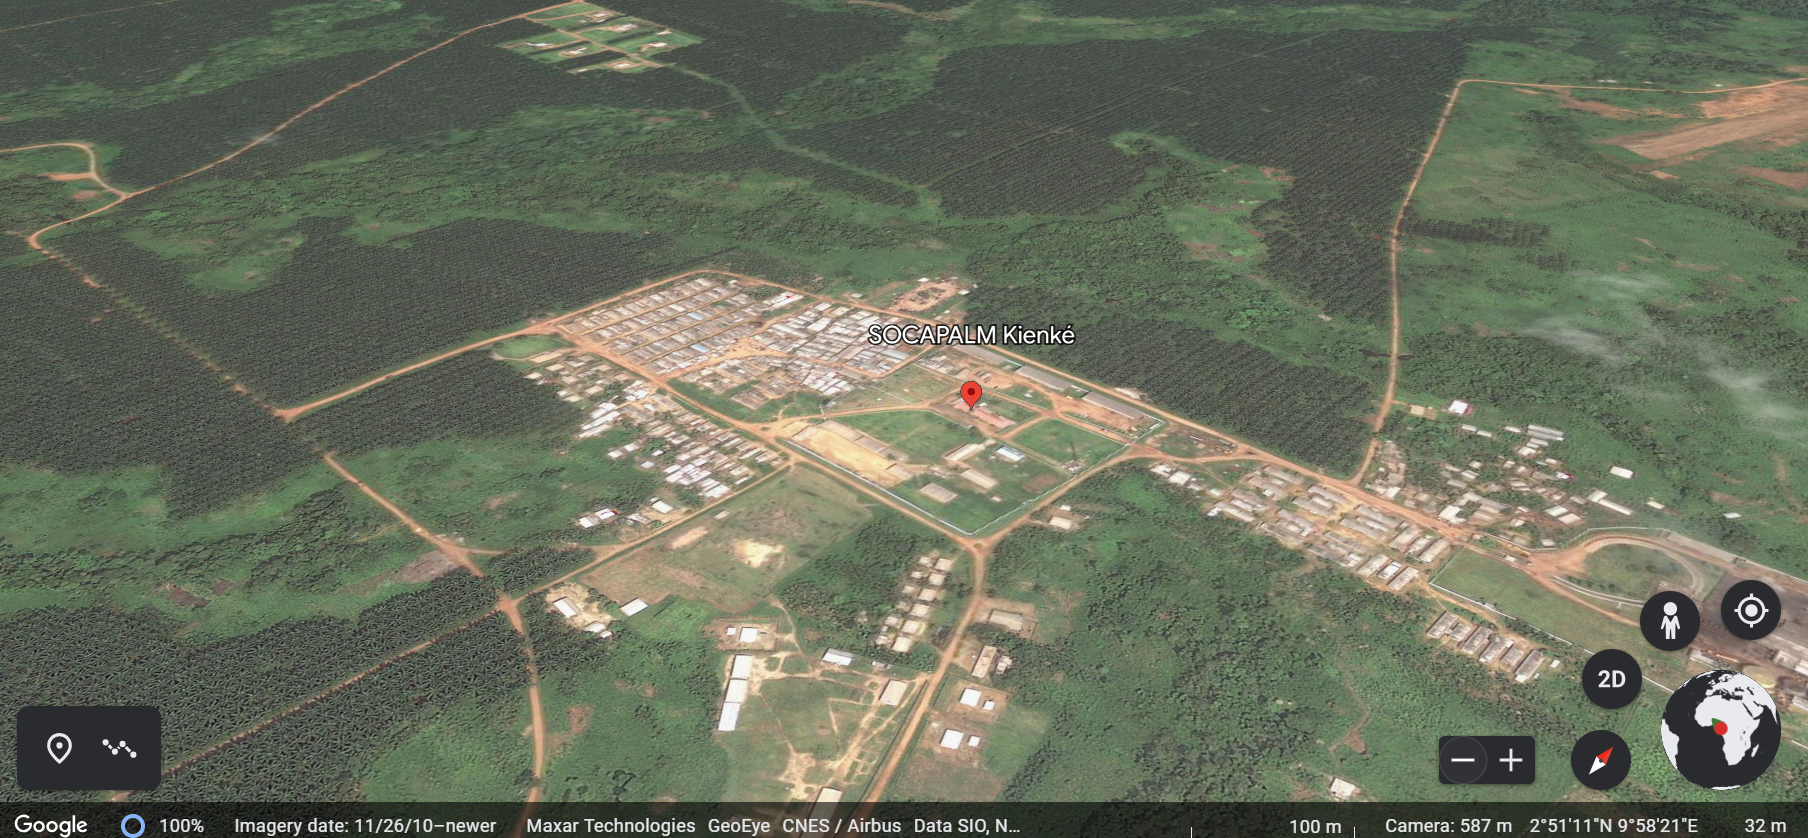 An expanse of Socapalm Kienke plantation, Cameroon. Satellite imagery using Google Earth.